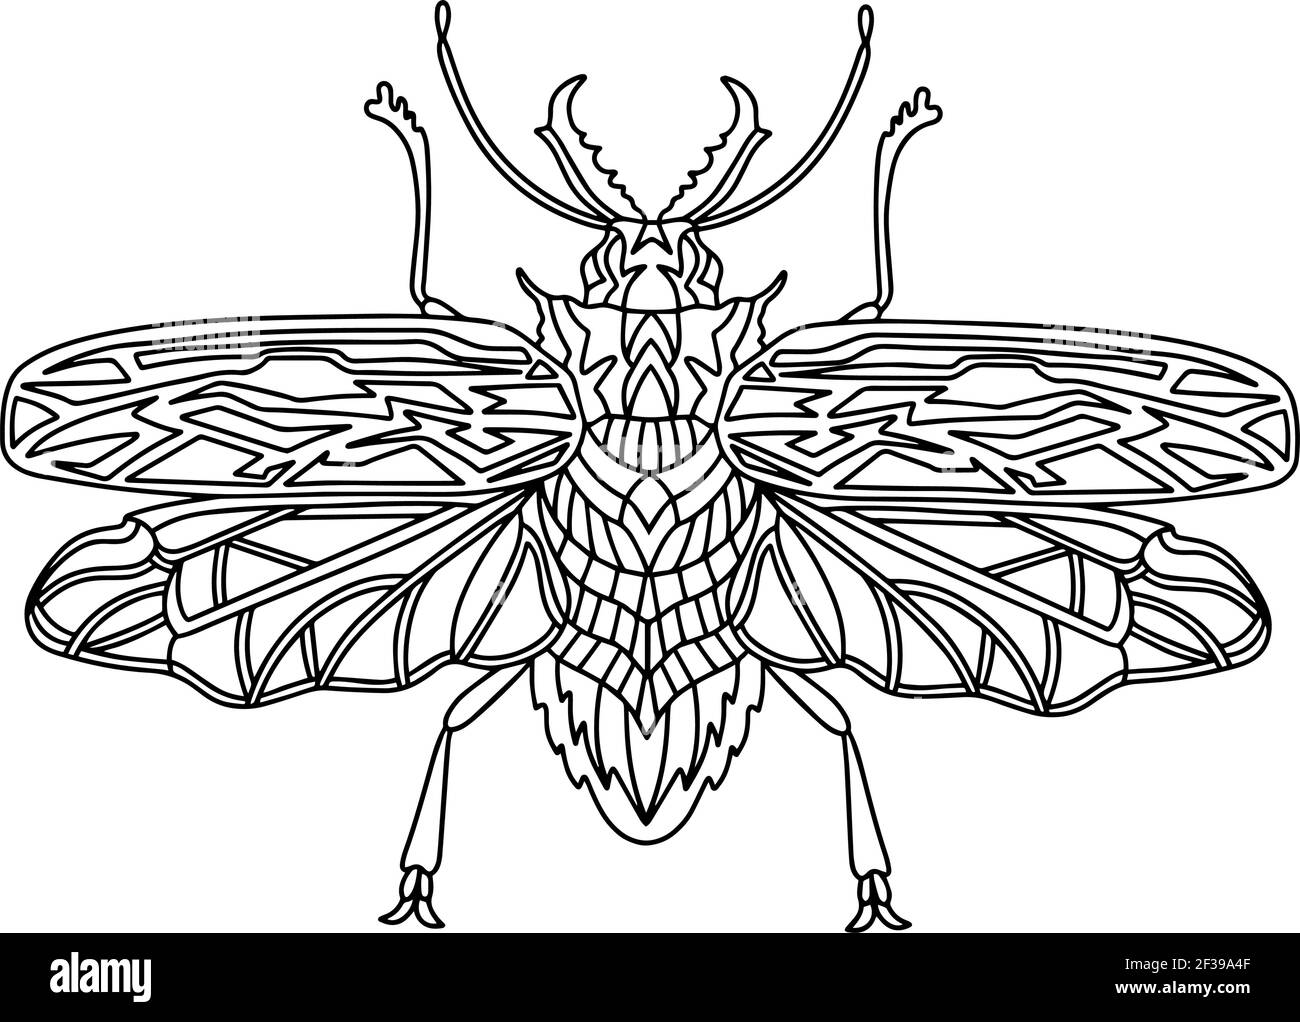 Beetle Brazilian woodcutter coloring book. Stock Vector